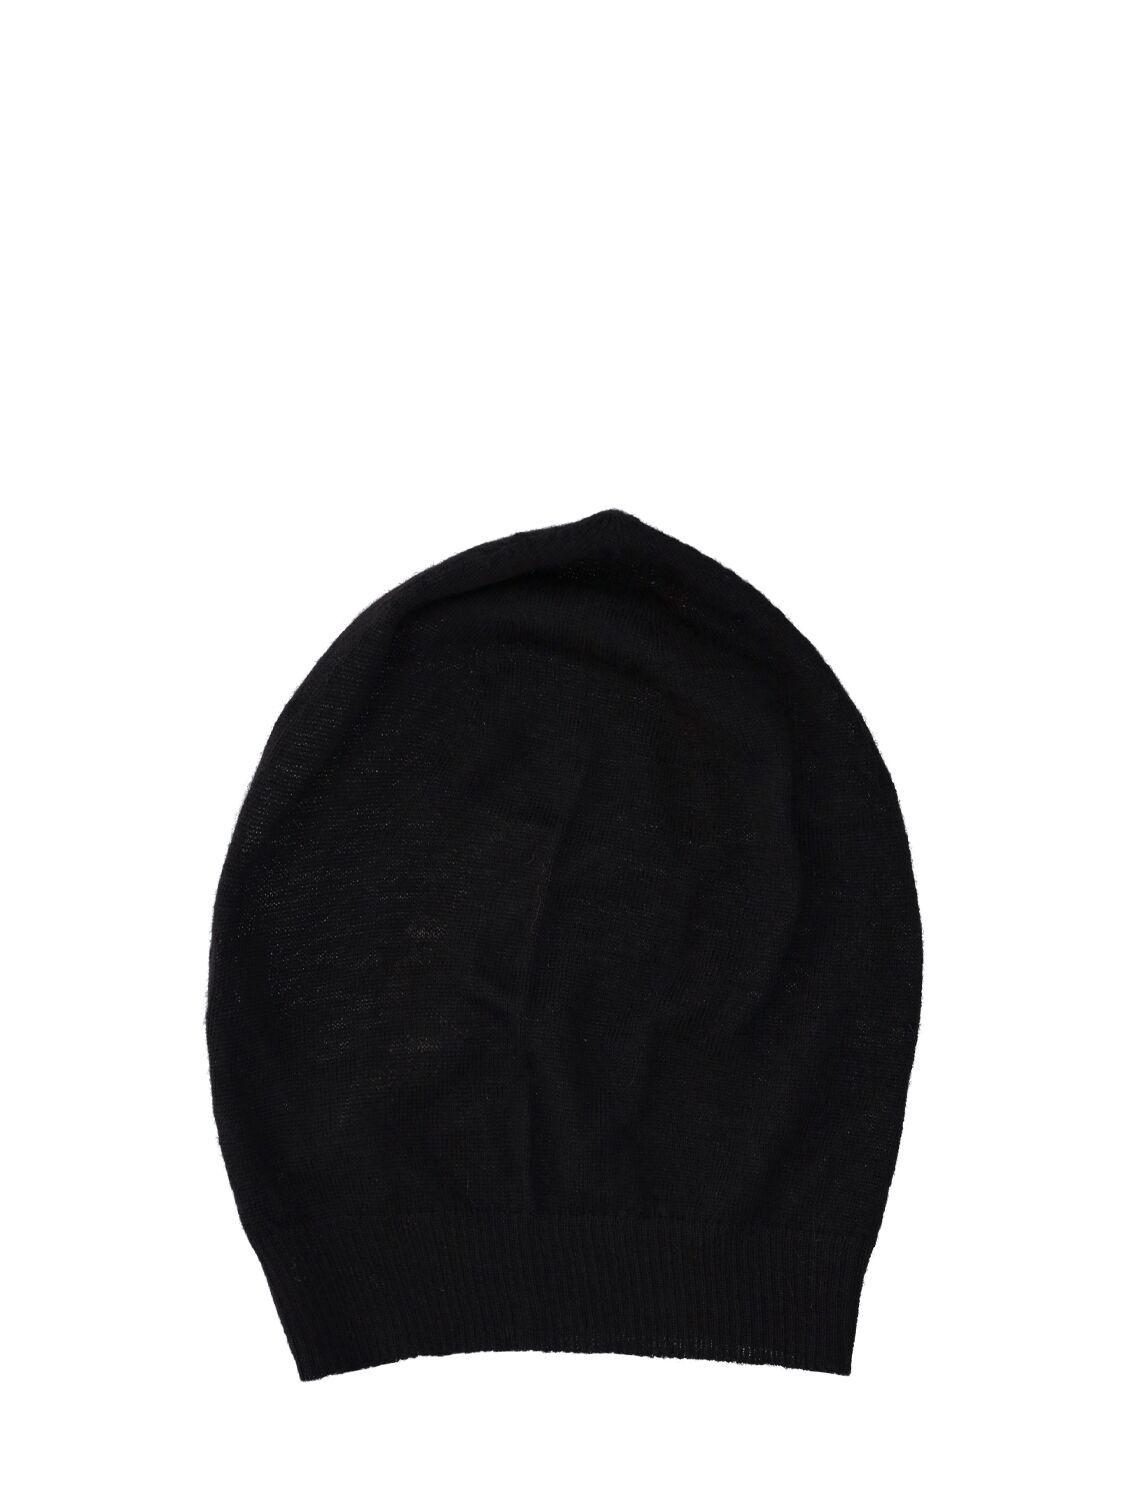 Rick Owens Medium Wool Hat in Black for Men | Lyst